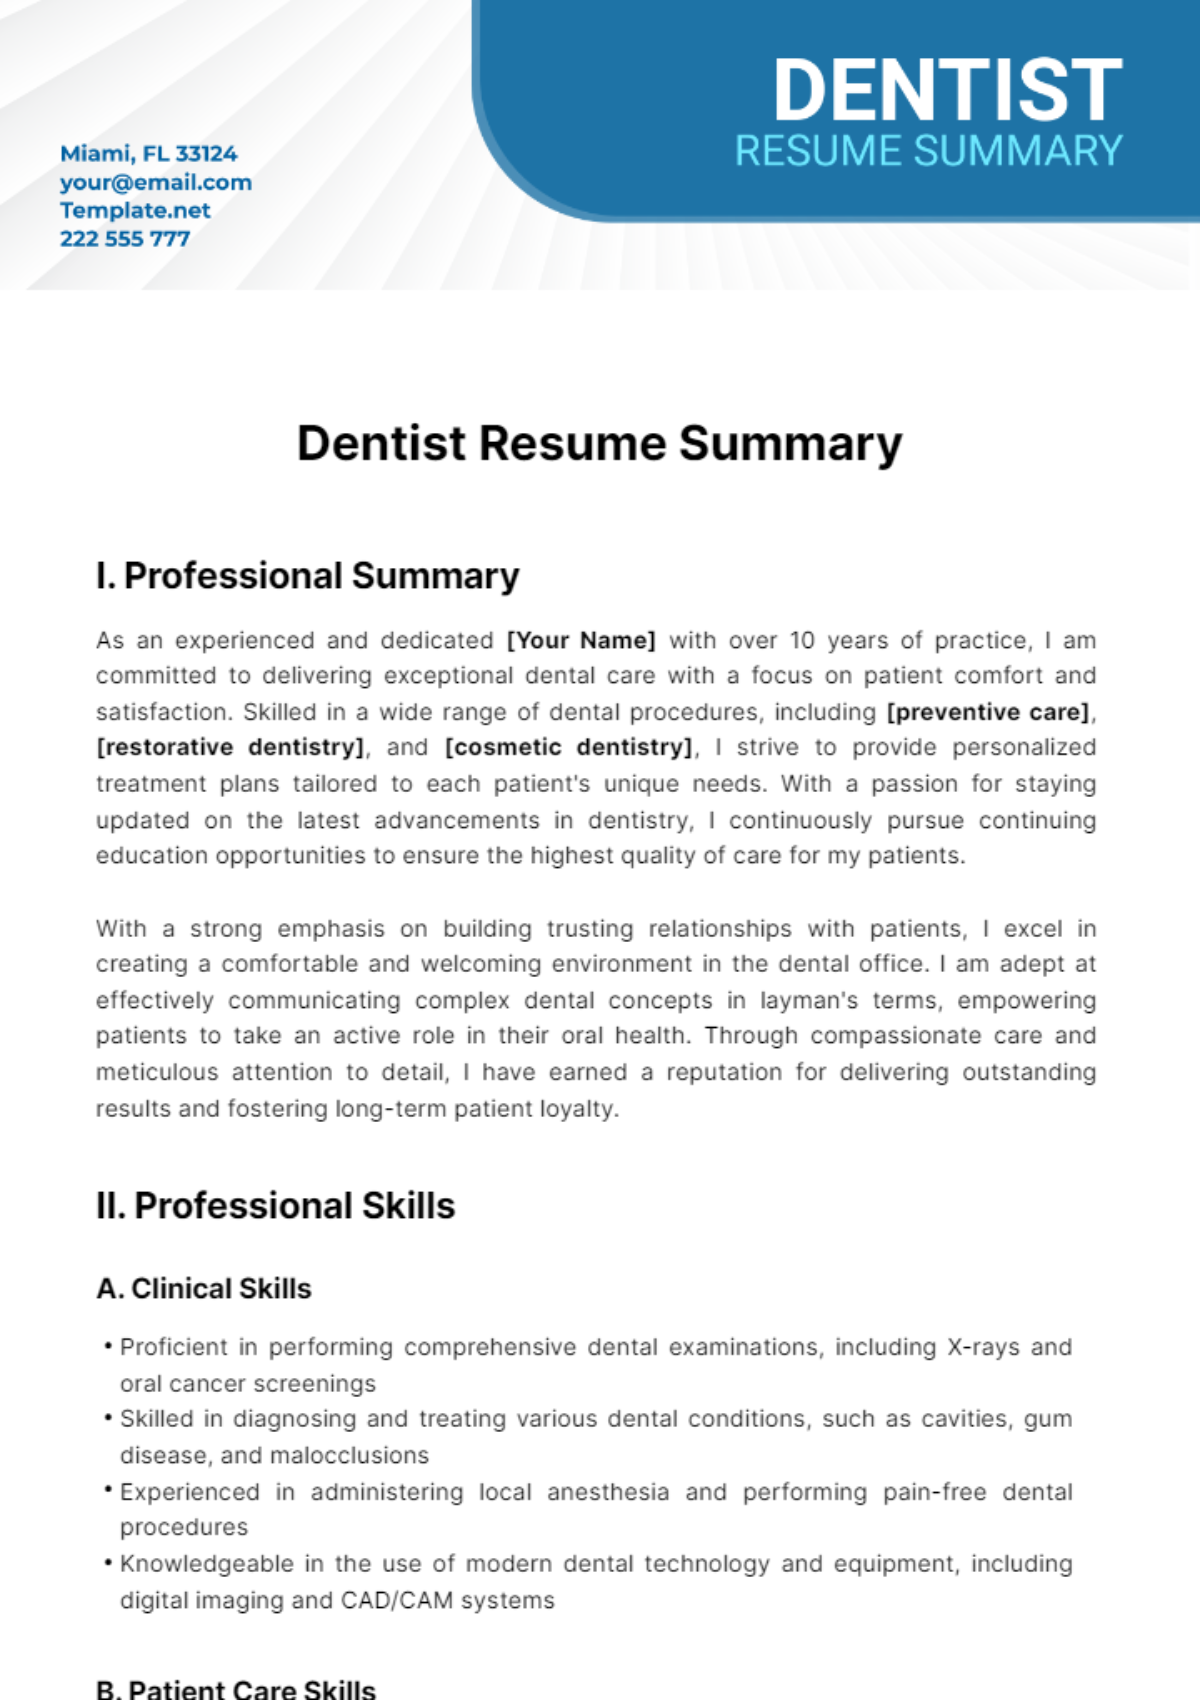 Dentist Resume Summary Template